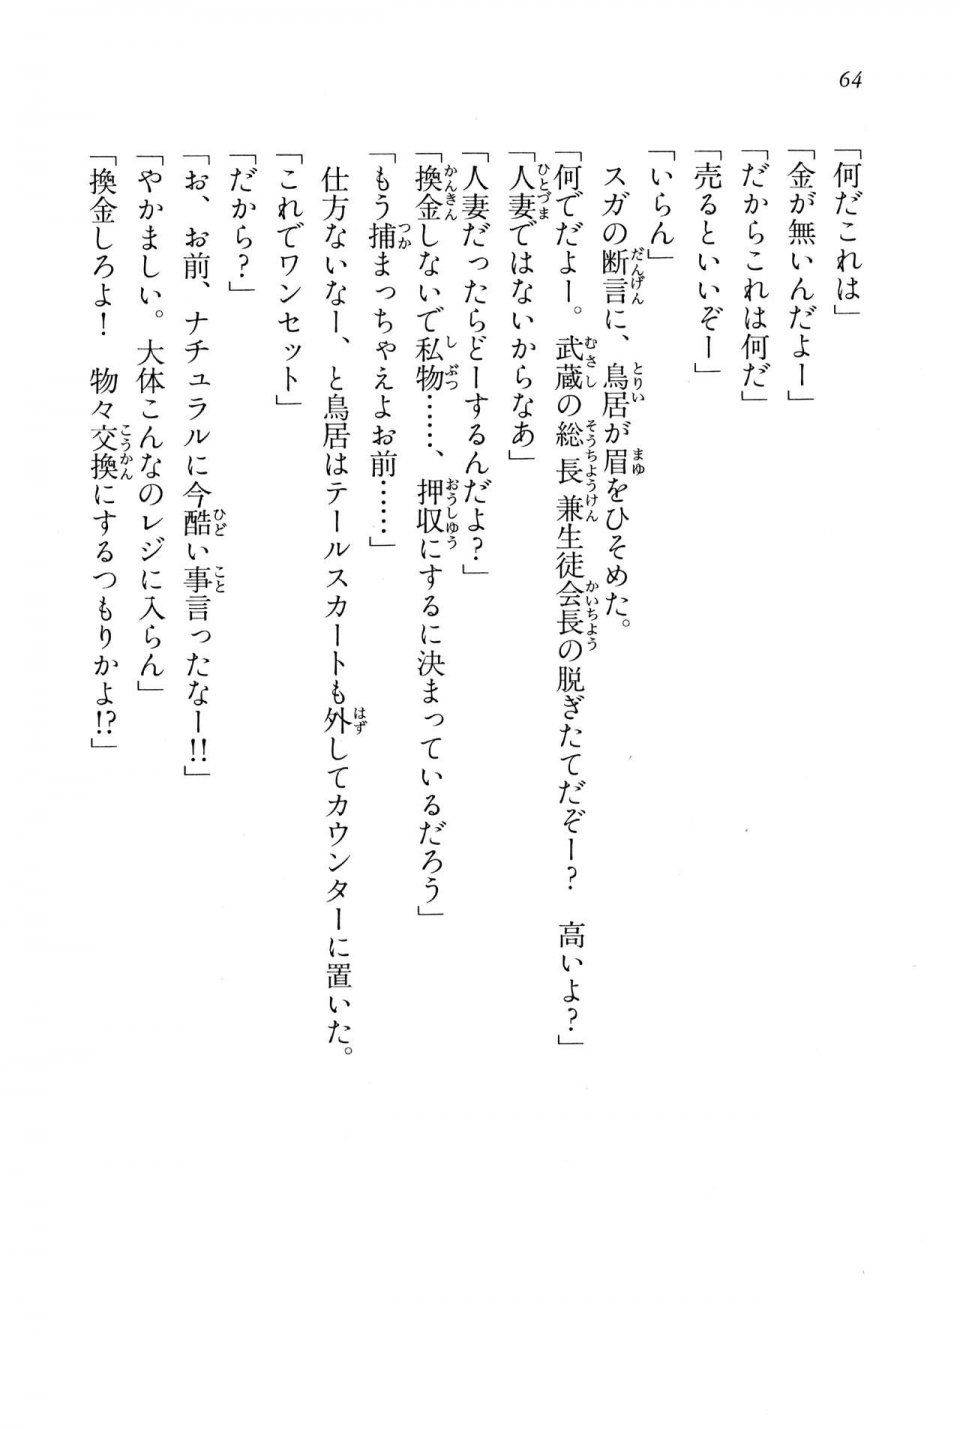 Kyoukai Senjou no Horizon BD Special Mininovel Vol 6(3B) - Photo #68